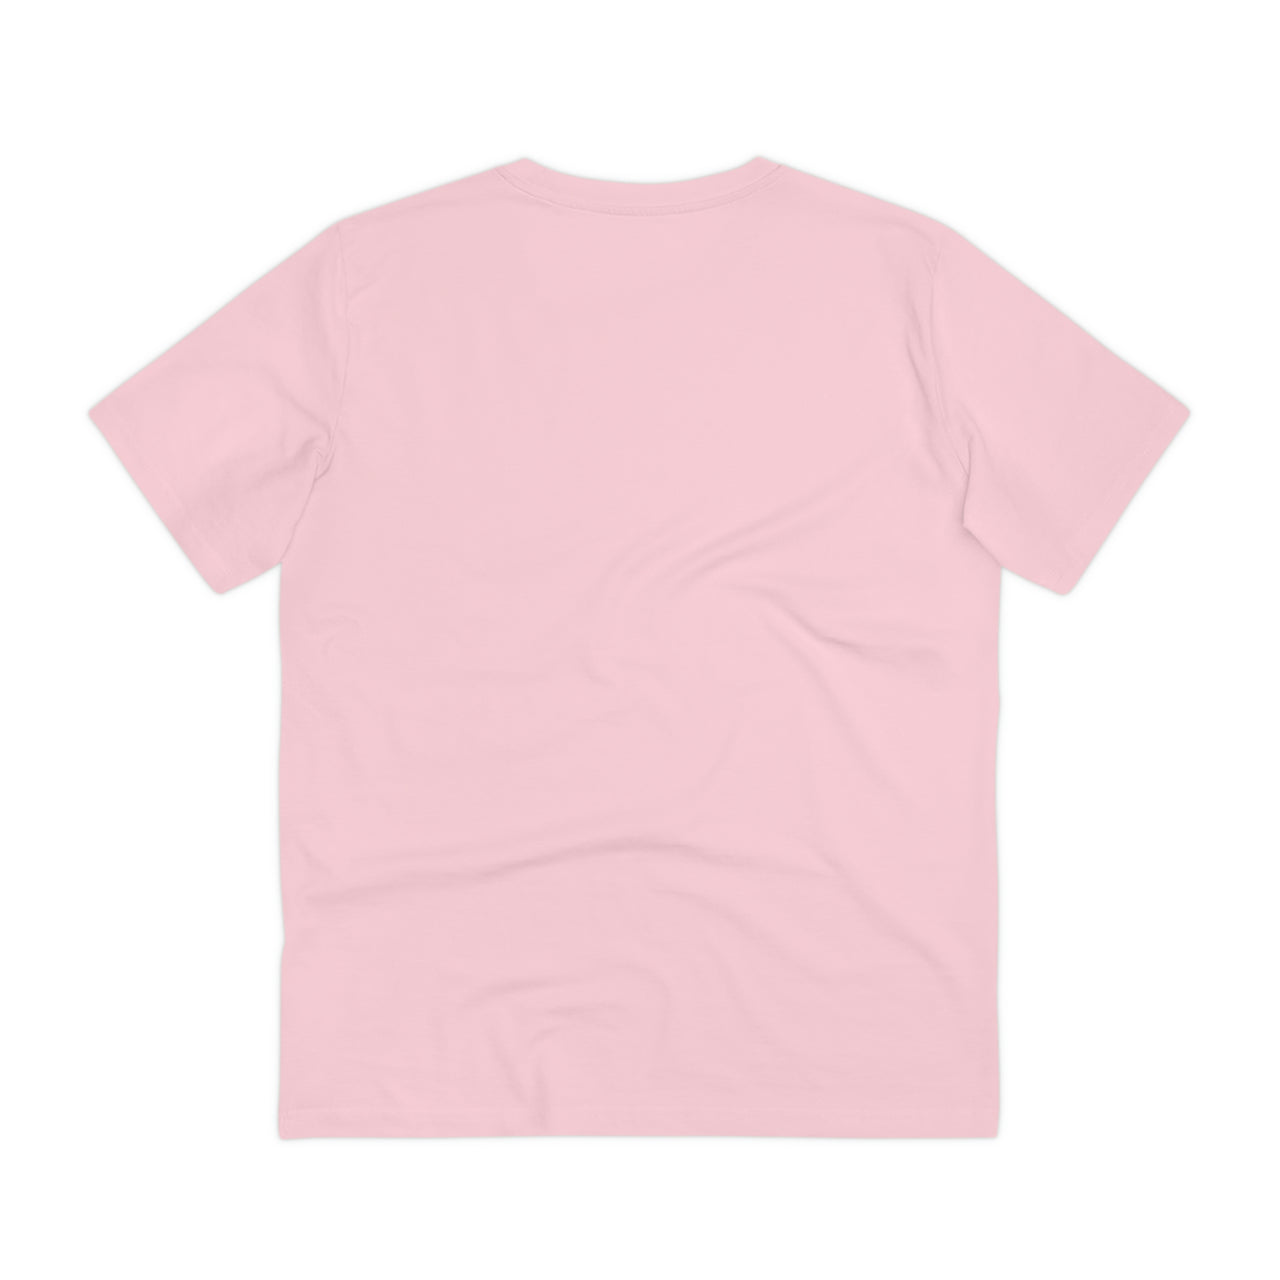 Rainbow Pride Flag T-shirt Unisex Size - #1 Word's Sexiest Dad Printify